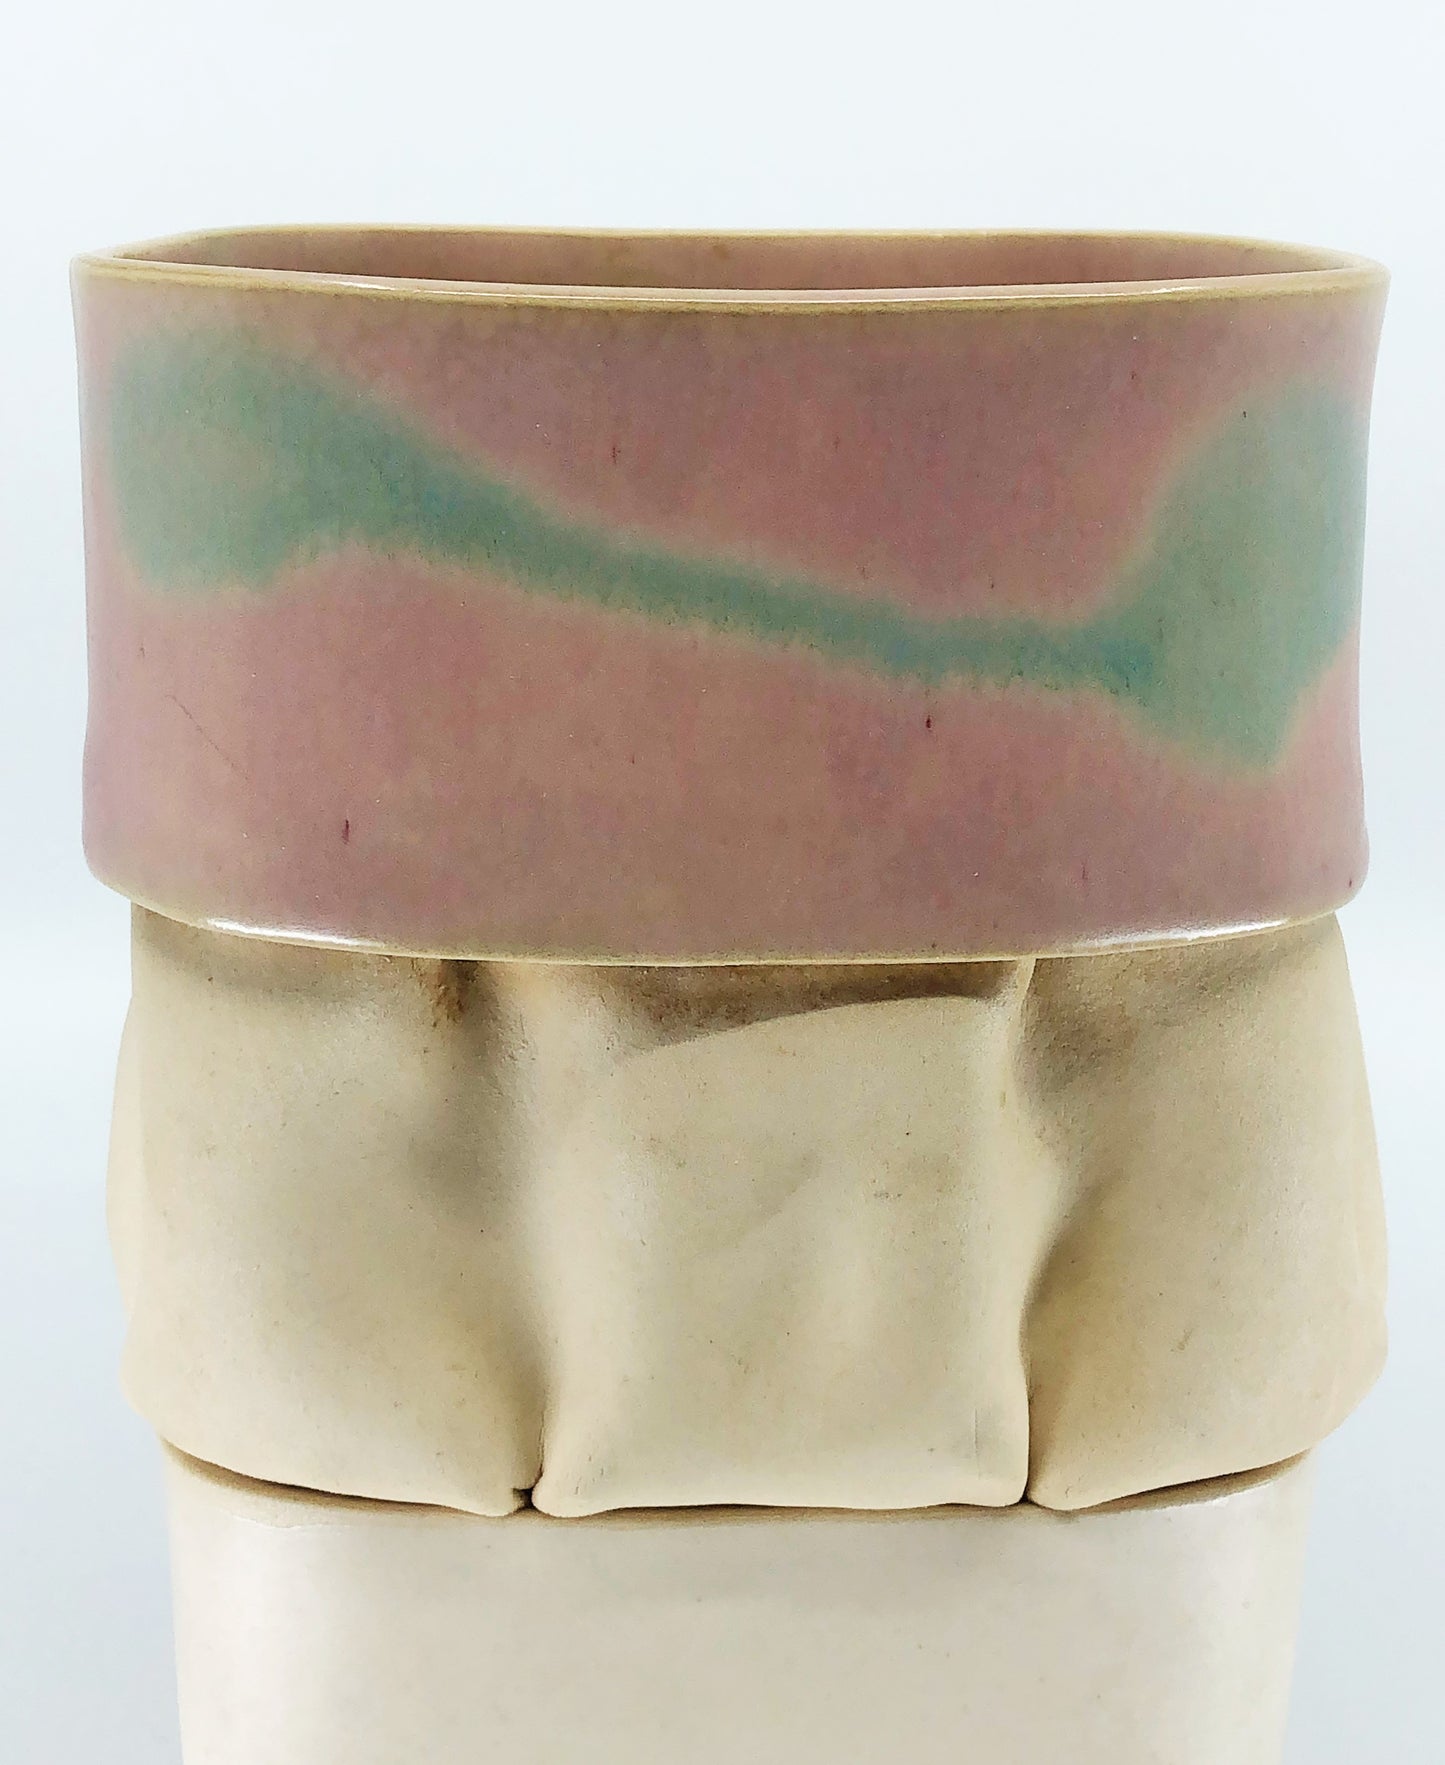 Handmade & Signed "Tie-Dye" Ceramic Vase